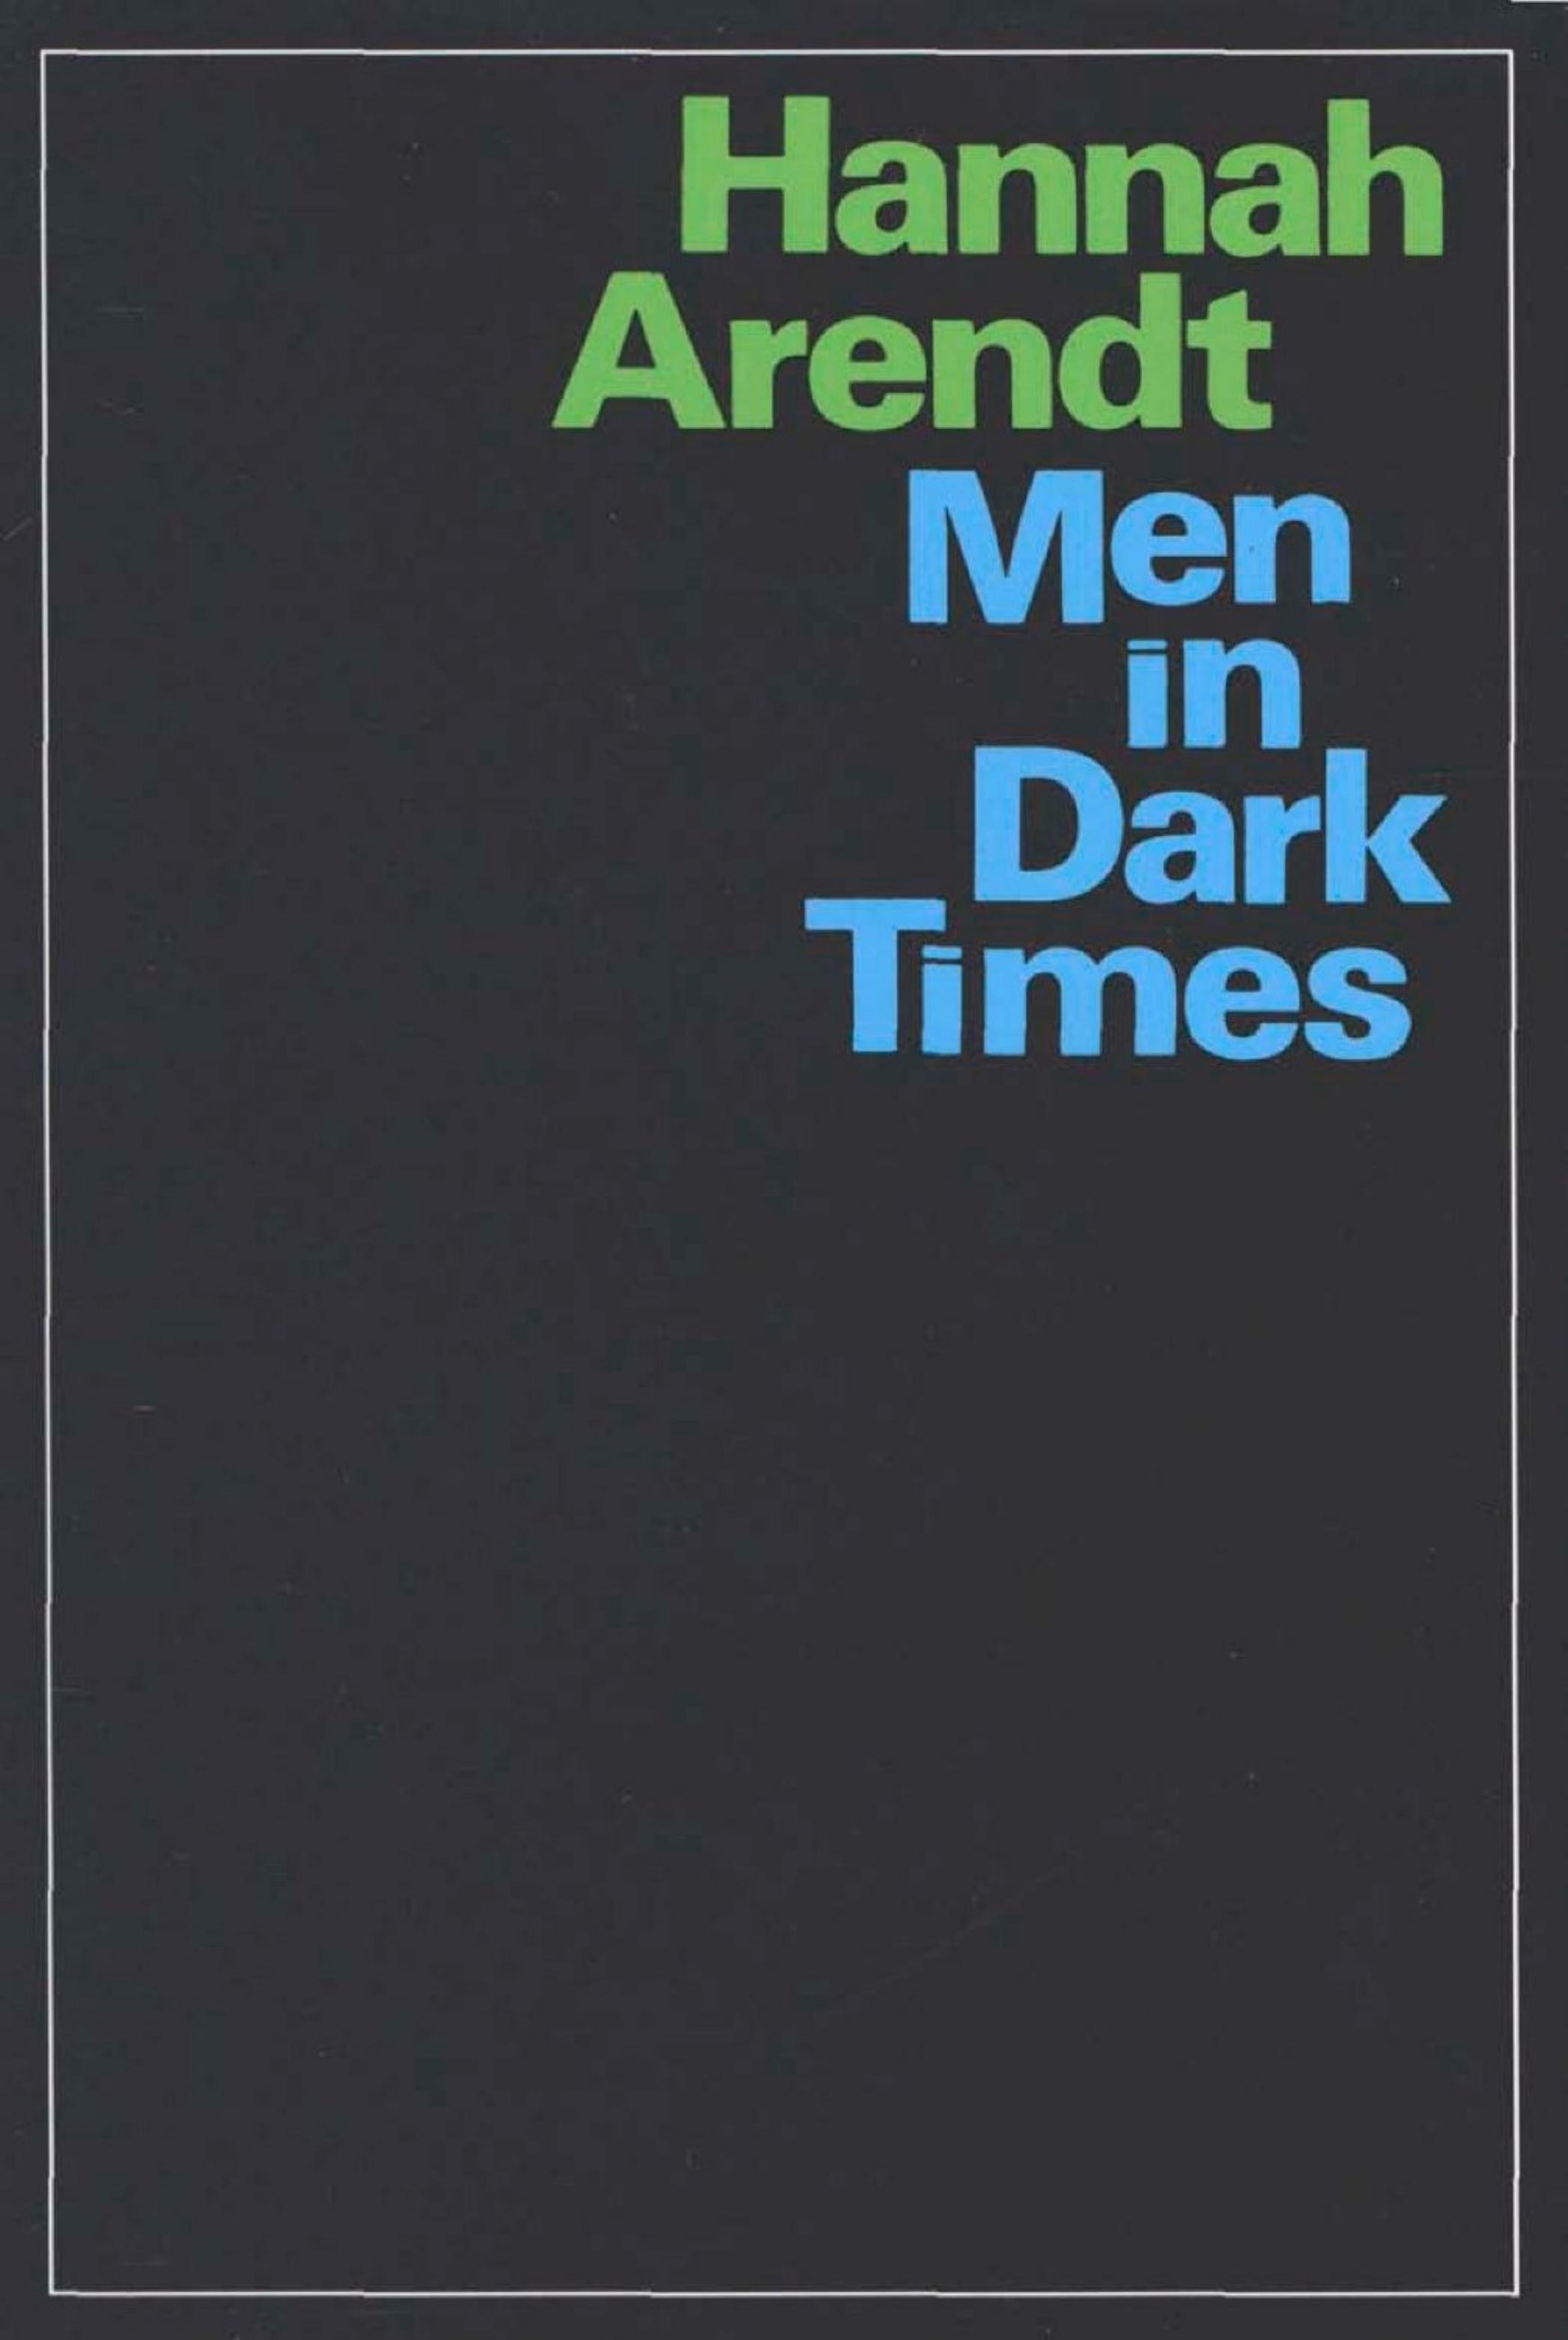 Men in Dark Times by Hannah Arendt